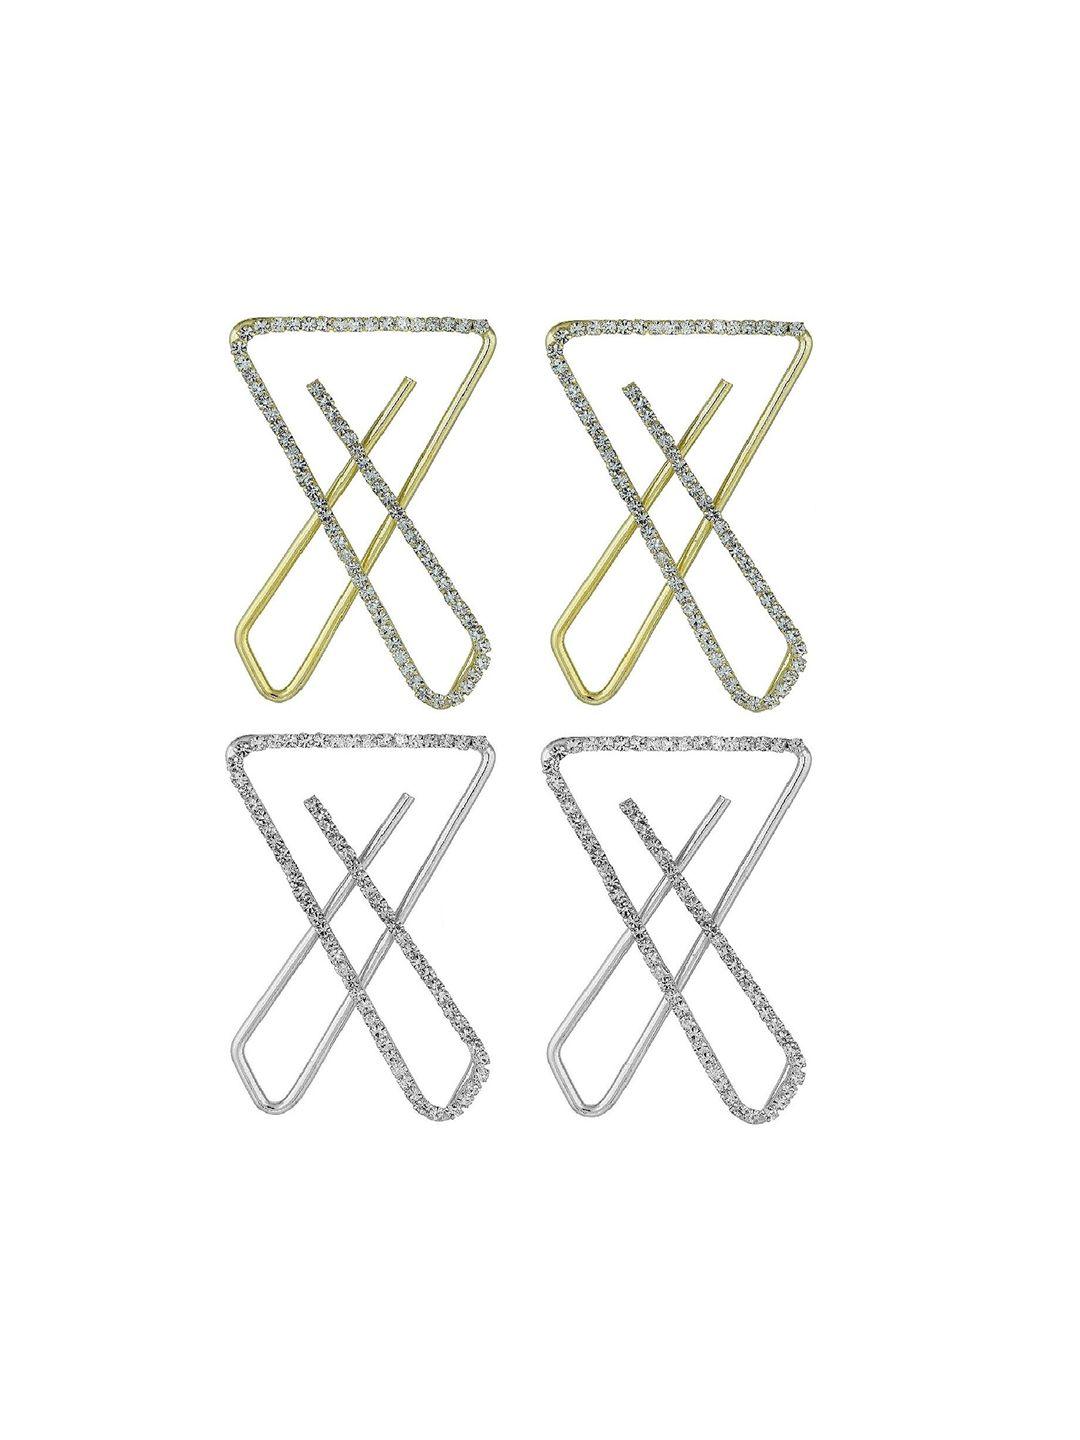 vama set of 4 silver & gold-plated rhinestone studded safety saree pins